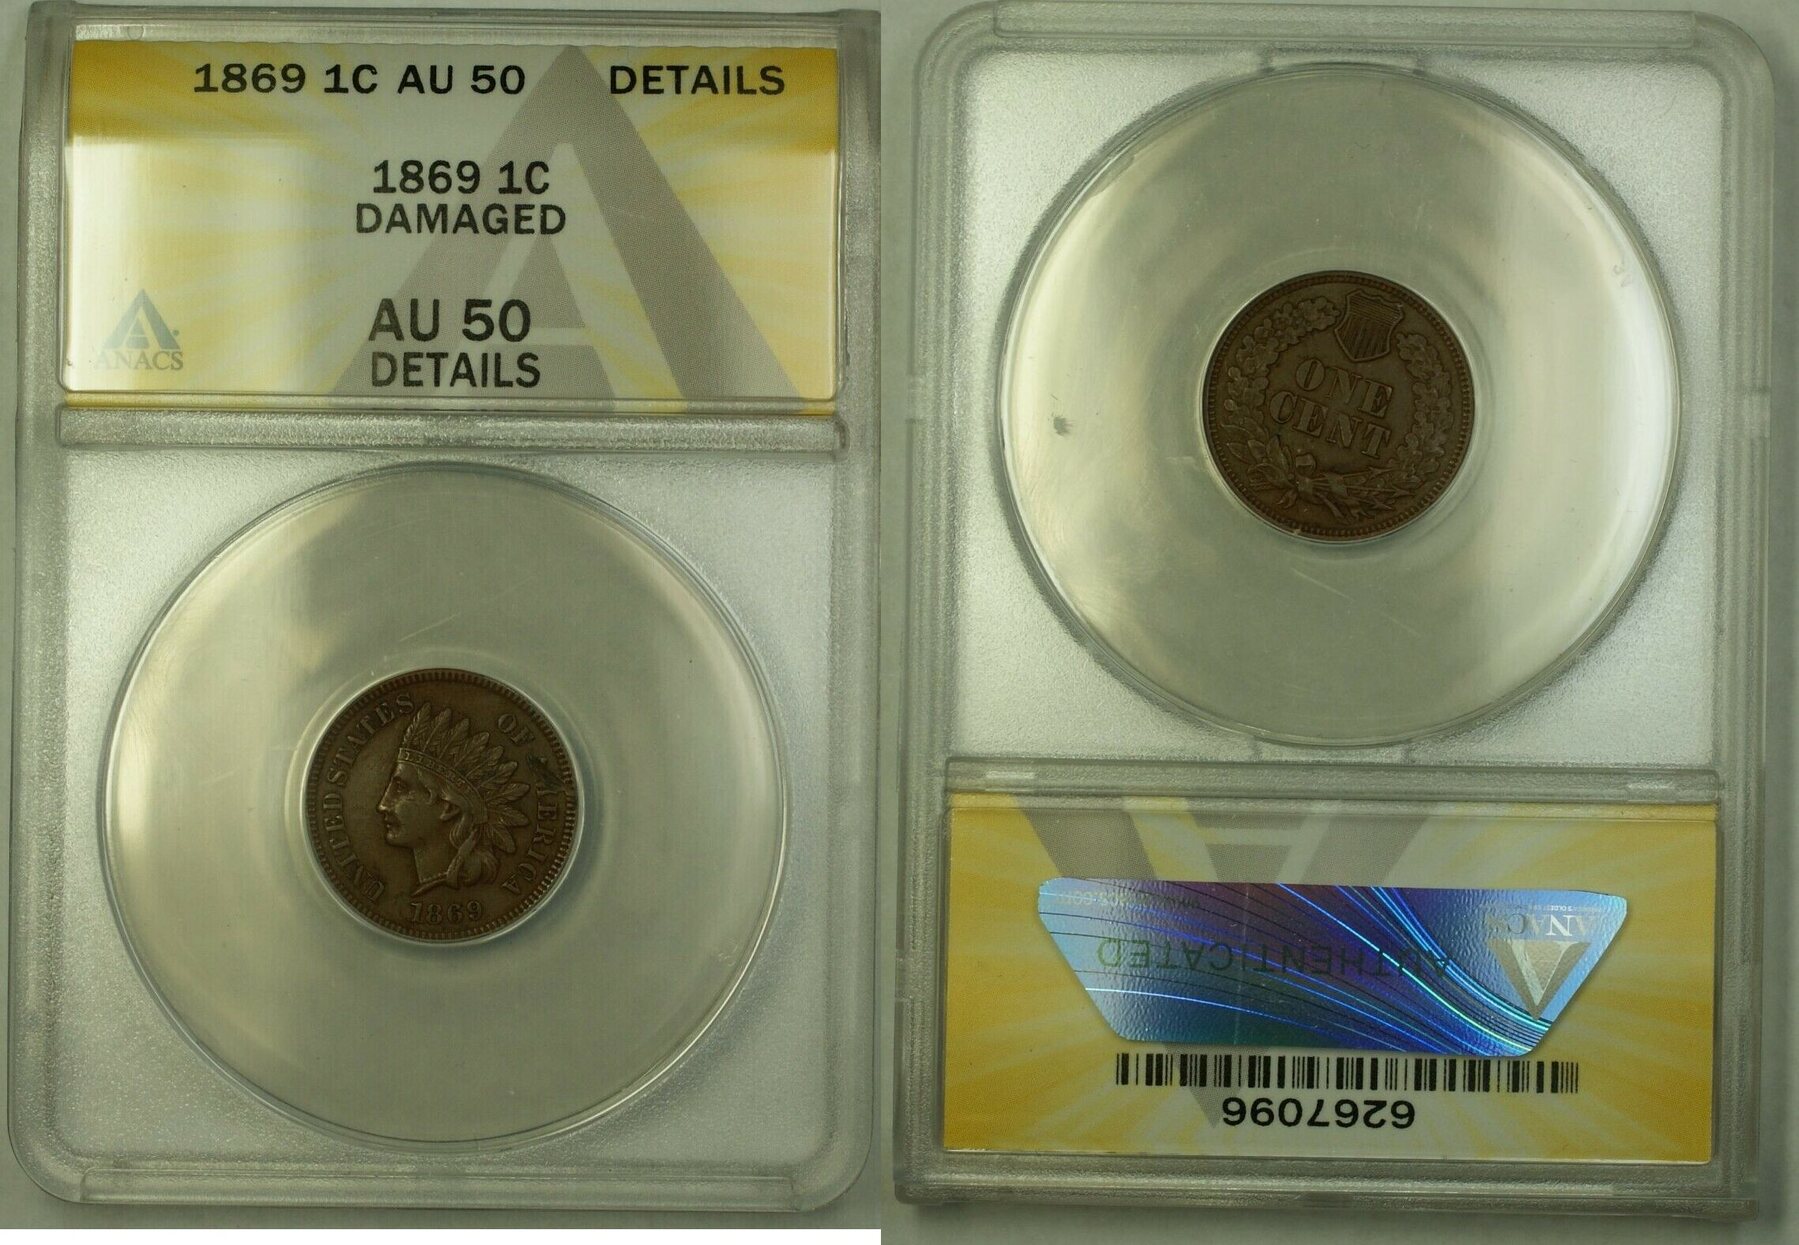 50 details. Сувенирные монеты BLT. 1795 Reeded Edge 1c Coin. C65n-c25a/3p.